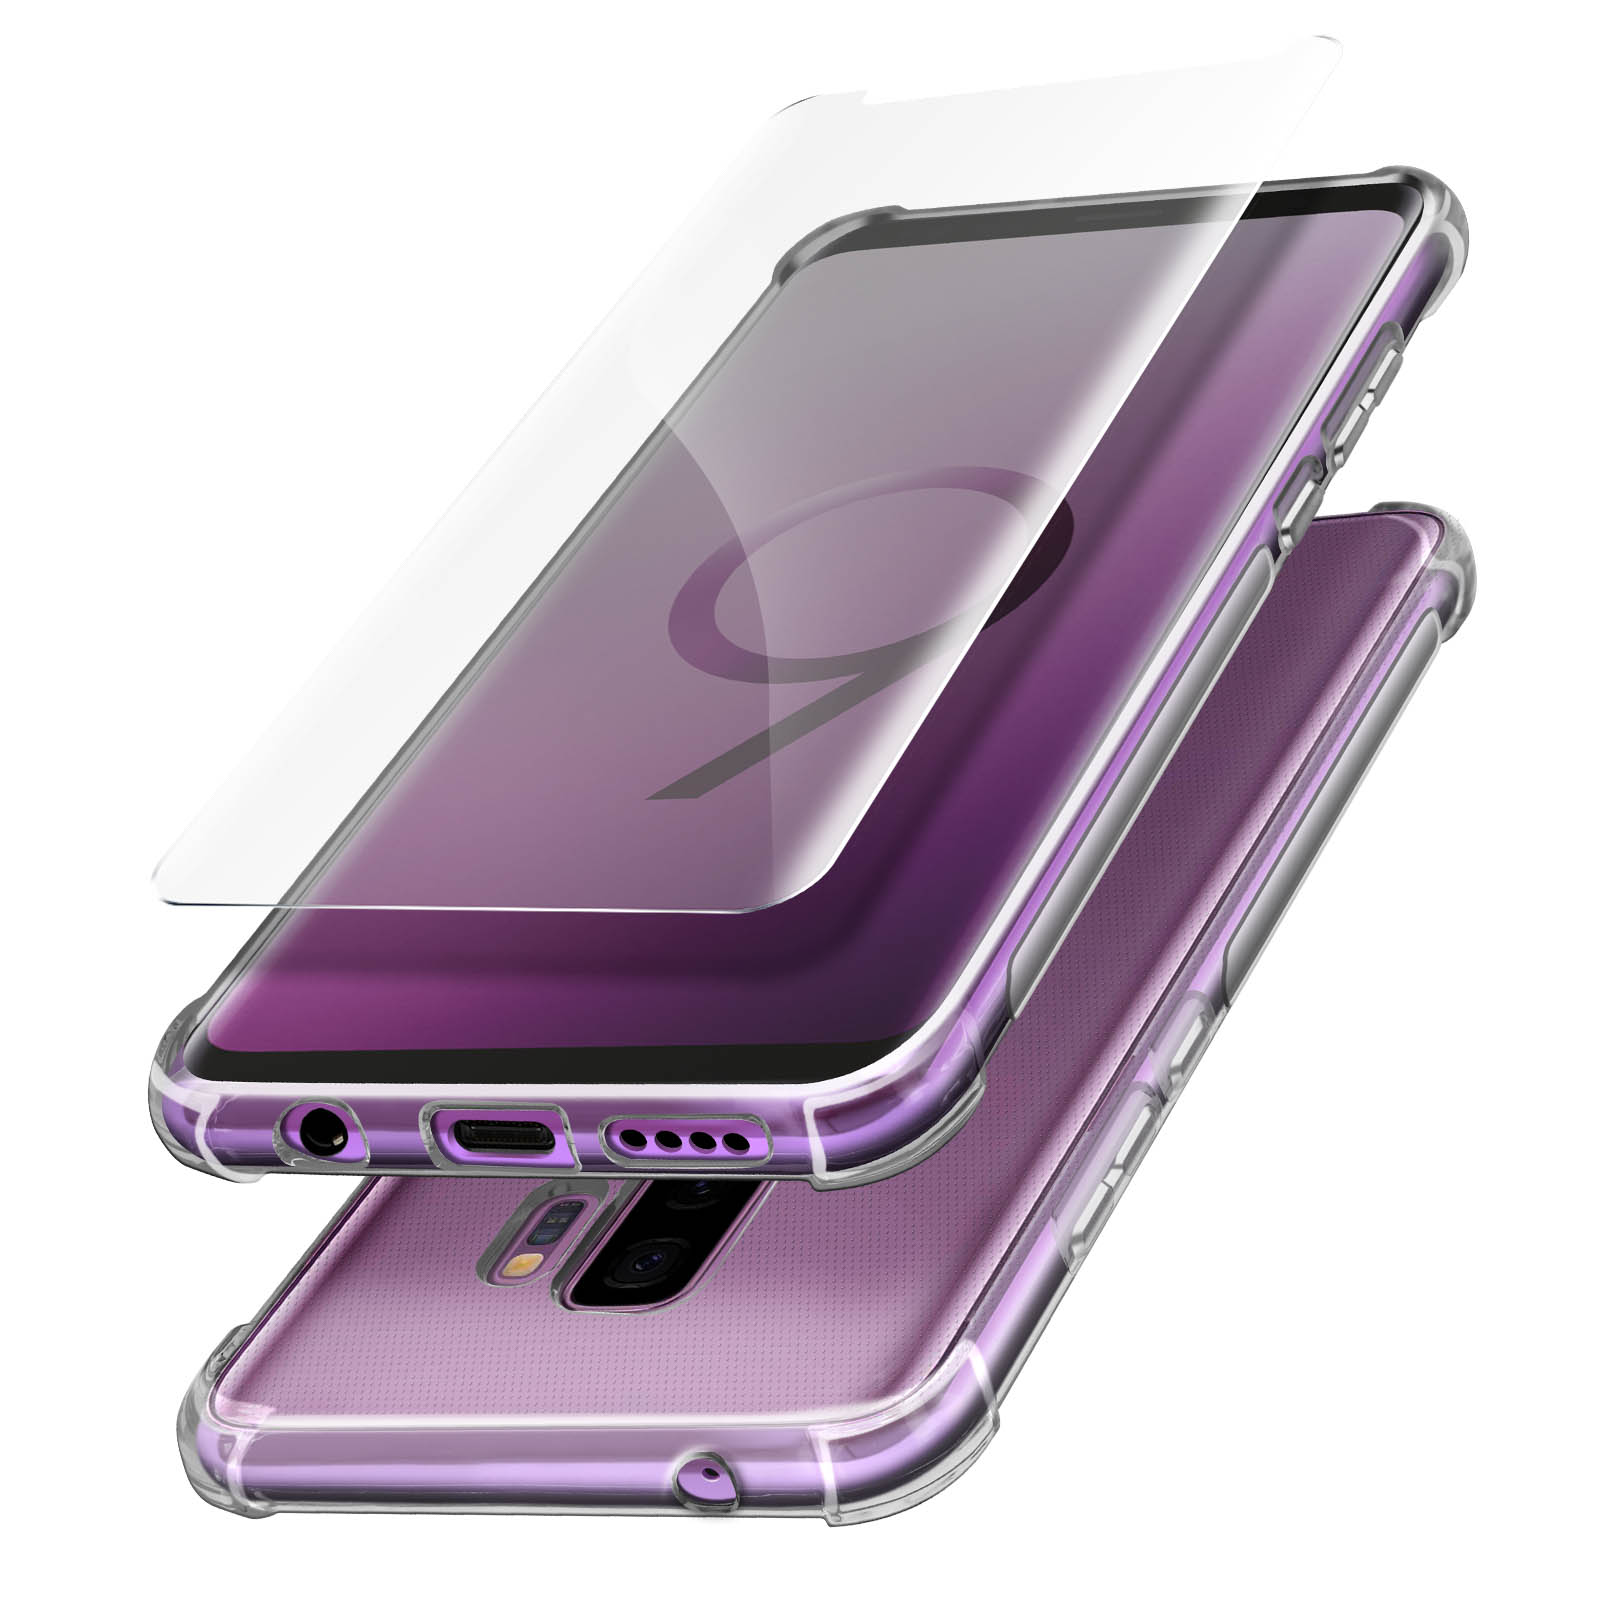 Backcover, Transparent Galaxy AVIZAR S9 Series, Prems Samsung, Plus,